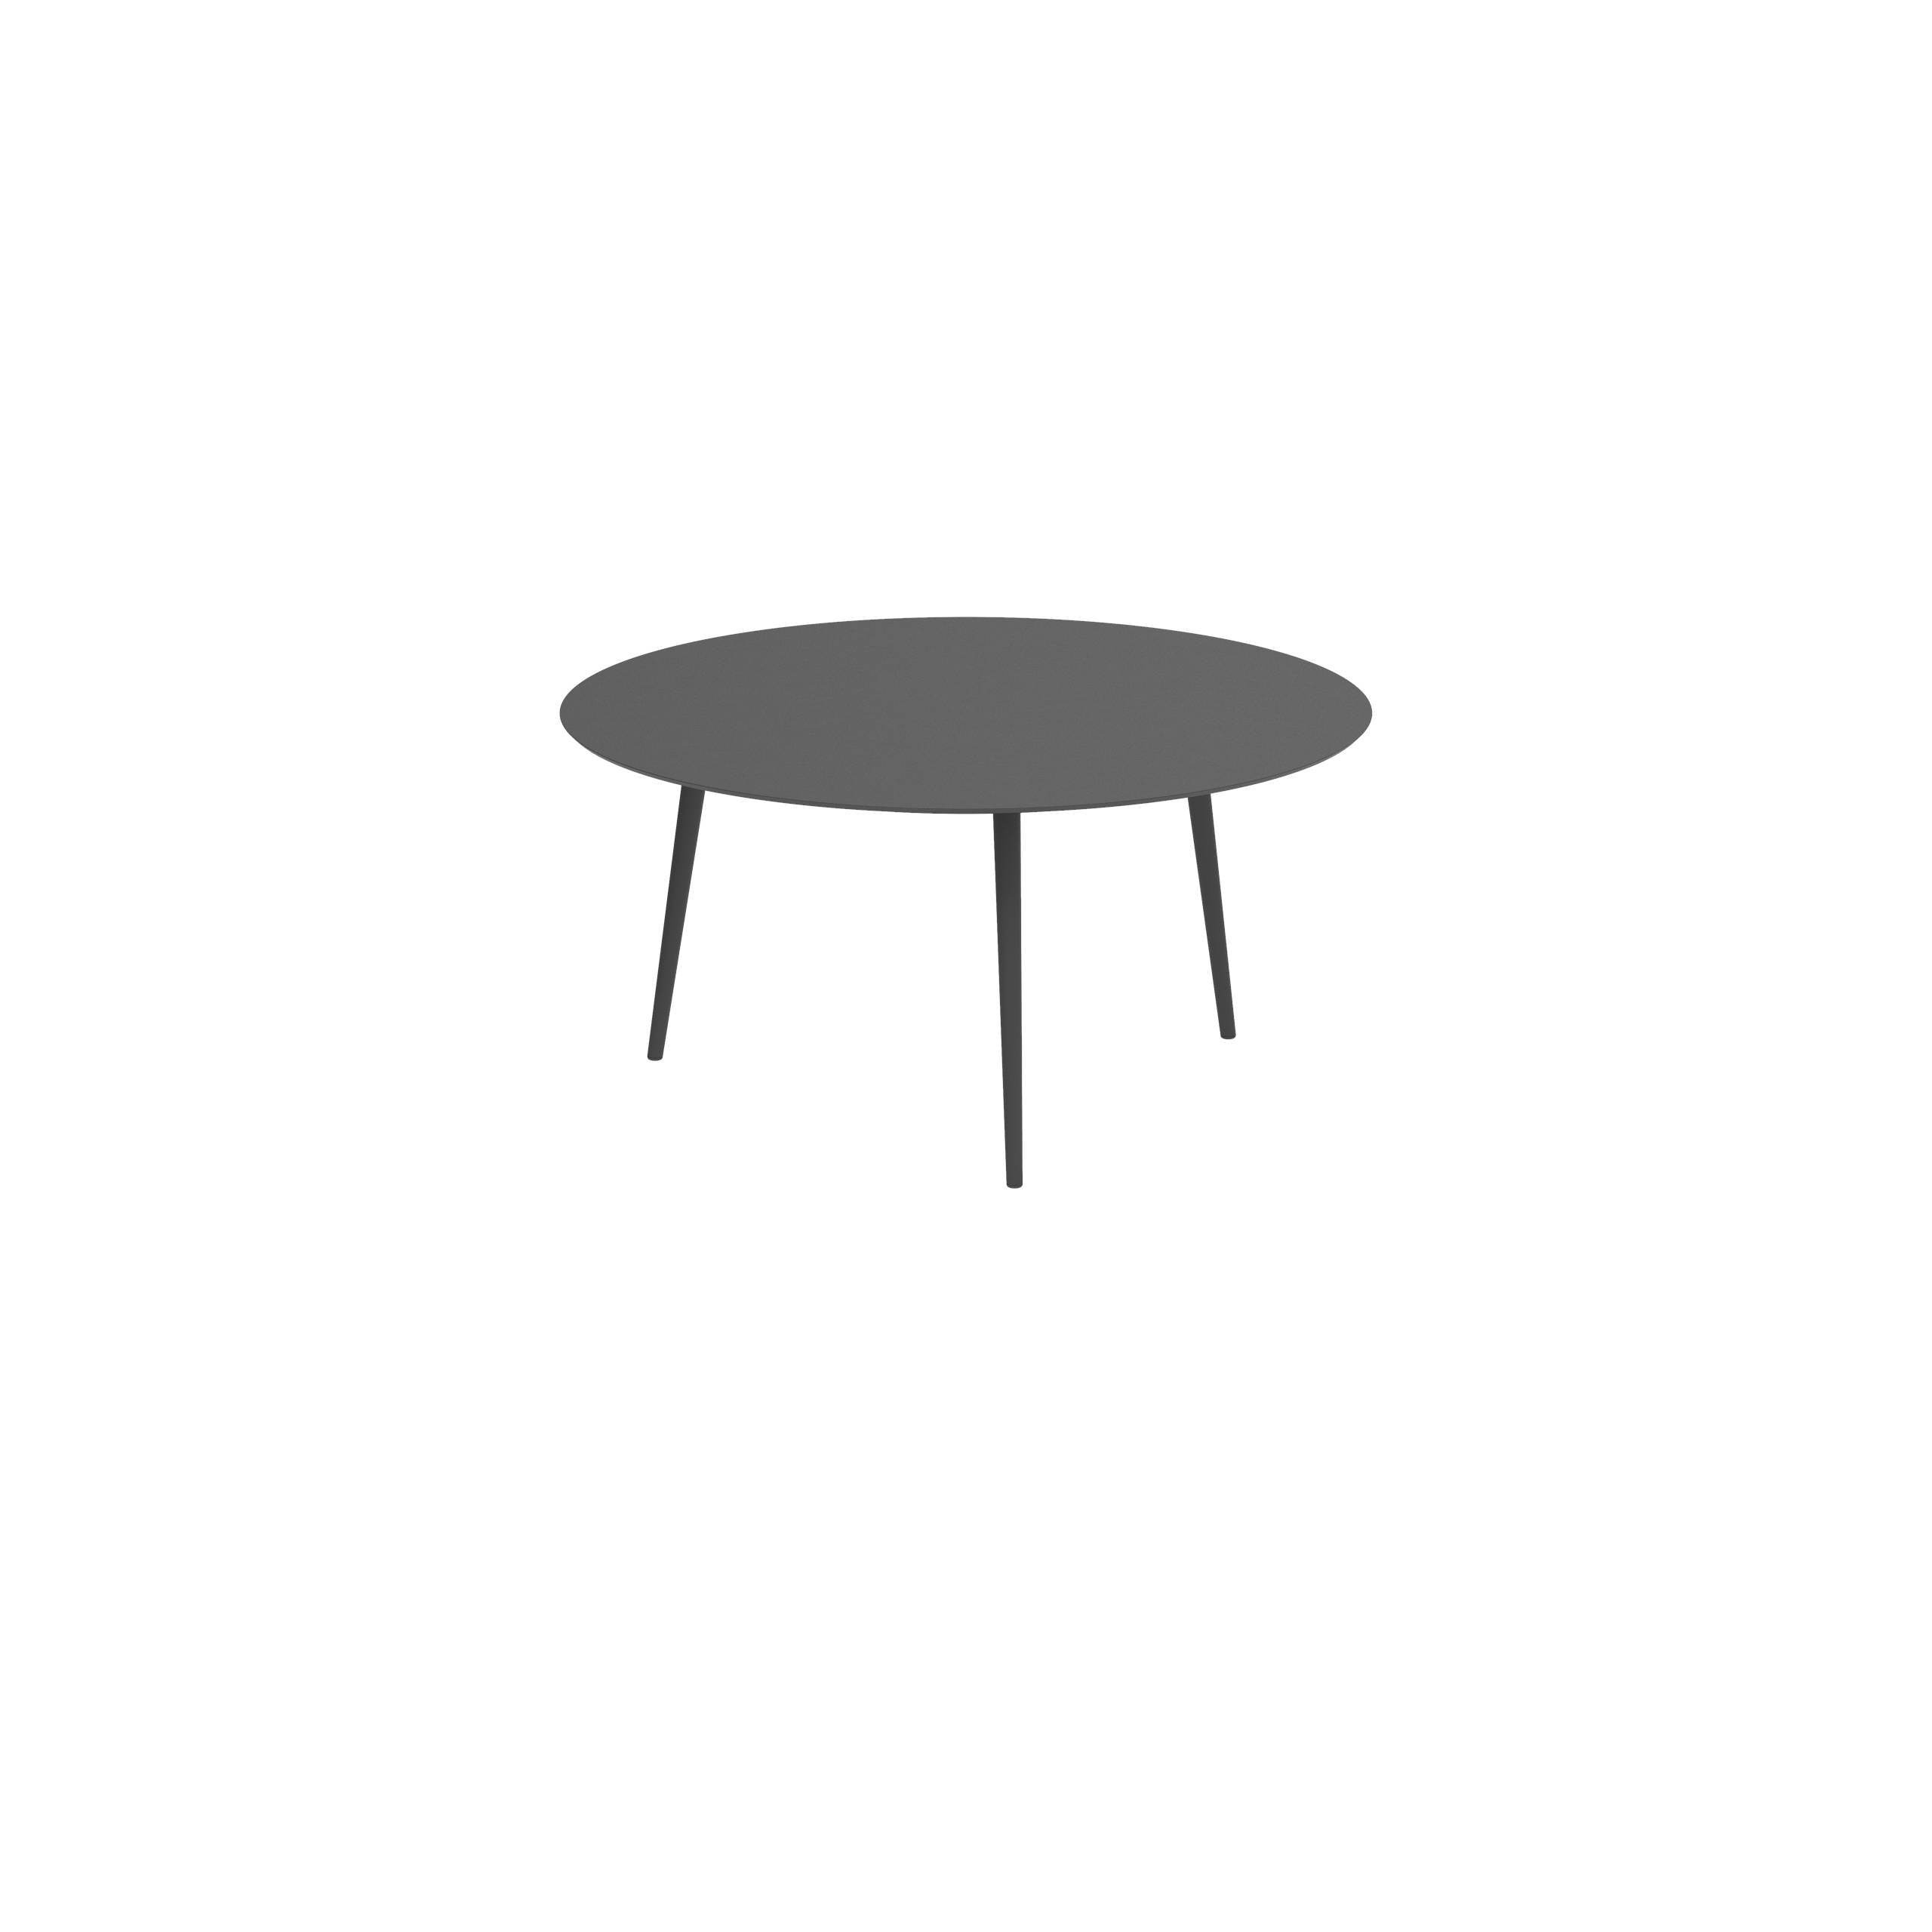 Styletto Standard Dining Table Ø 160cm Alu Legs Anthracite Ceramic Top Black